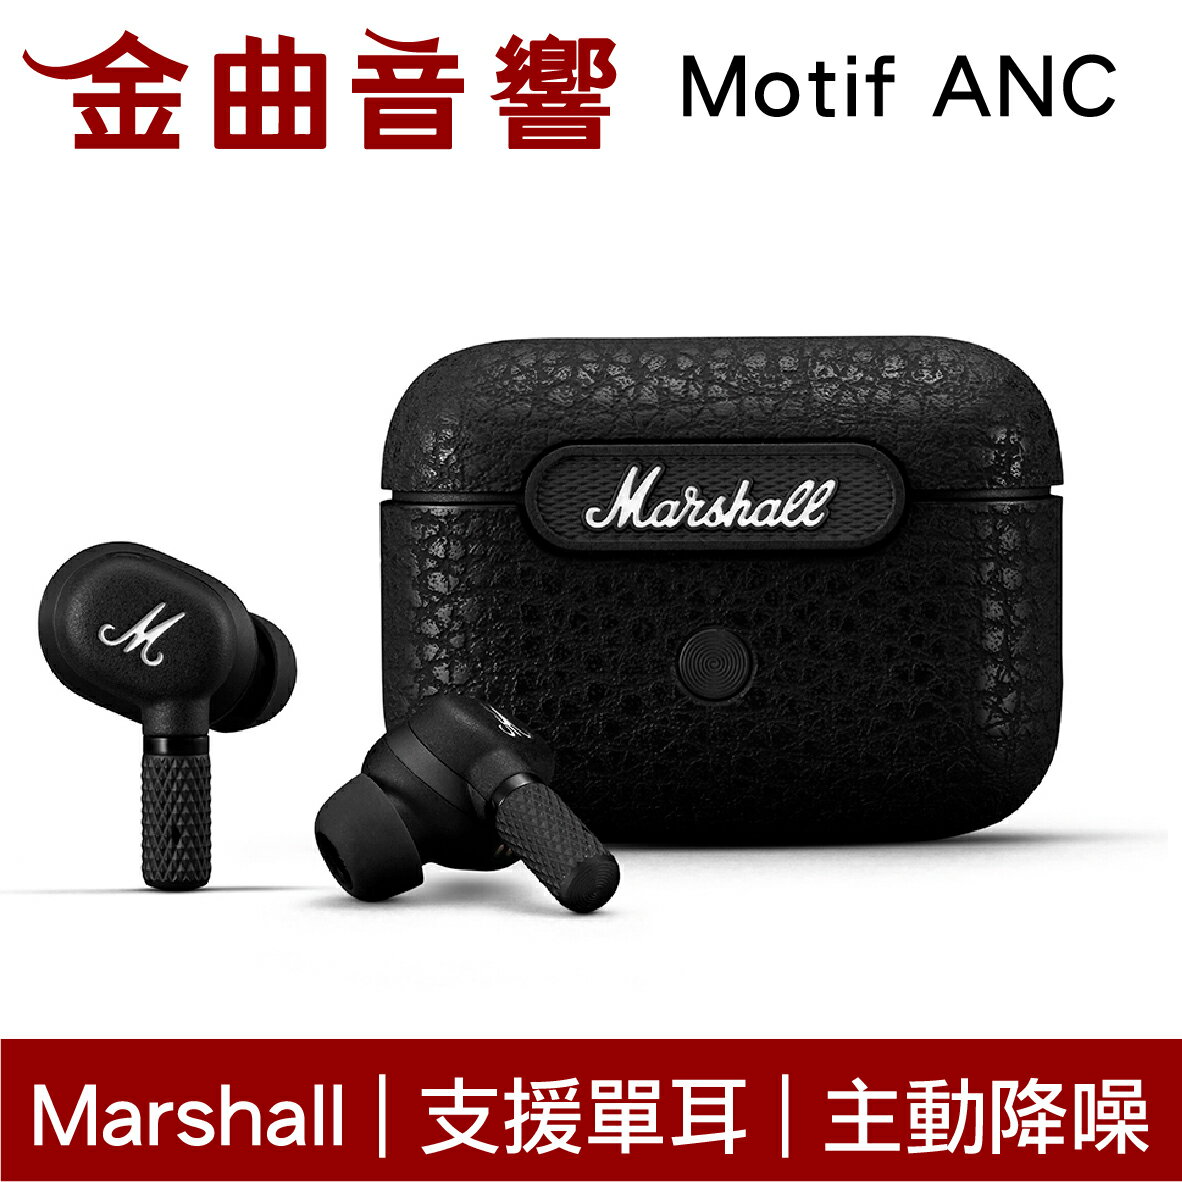 Marshall Motif A.N.C 主動降噪通透模式支援單耳IPX5 真無線藍牙耳機